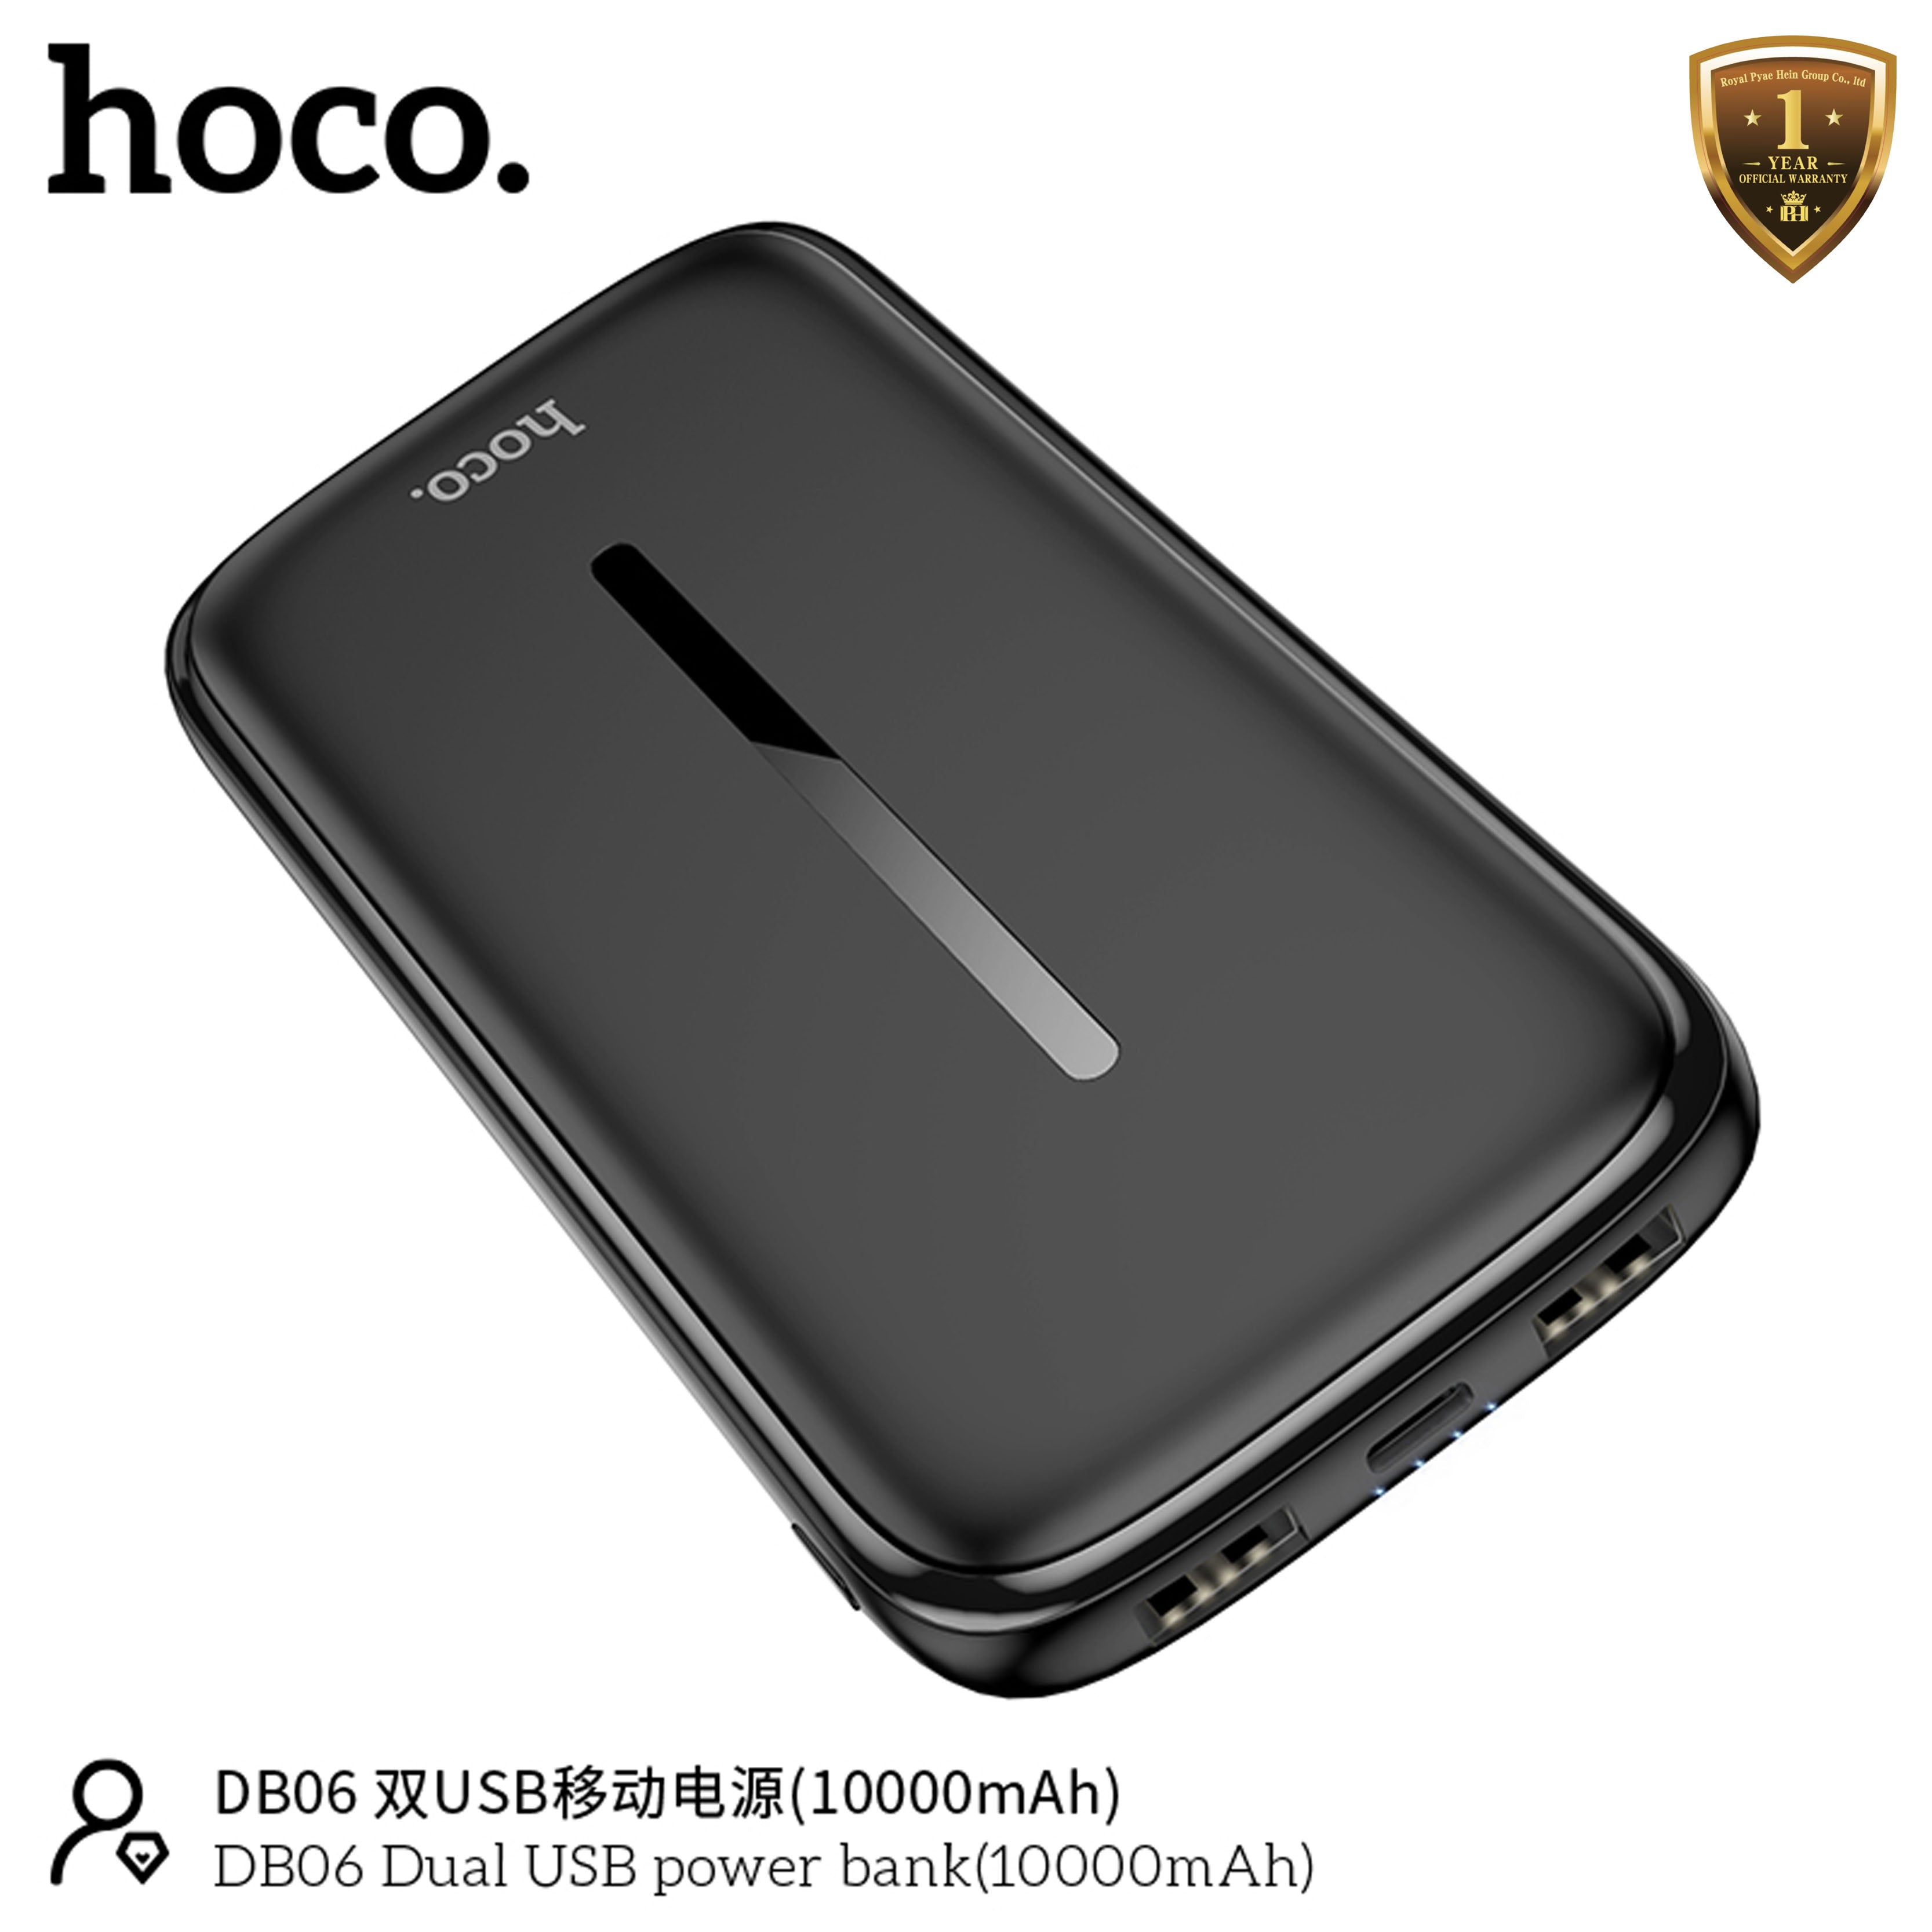 HOCO DB06 Dual USB Port Power bank (10000mAh) - ErkamsGadgetStore